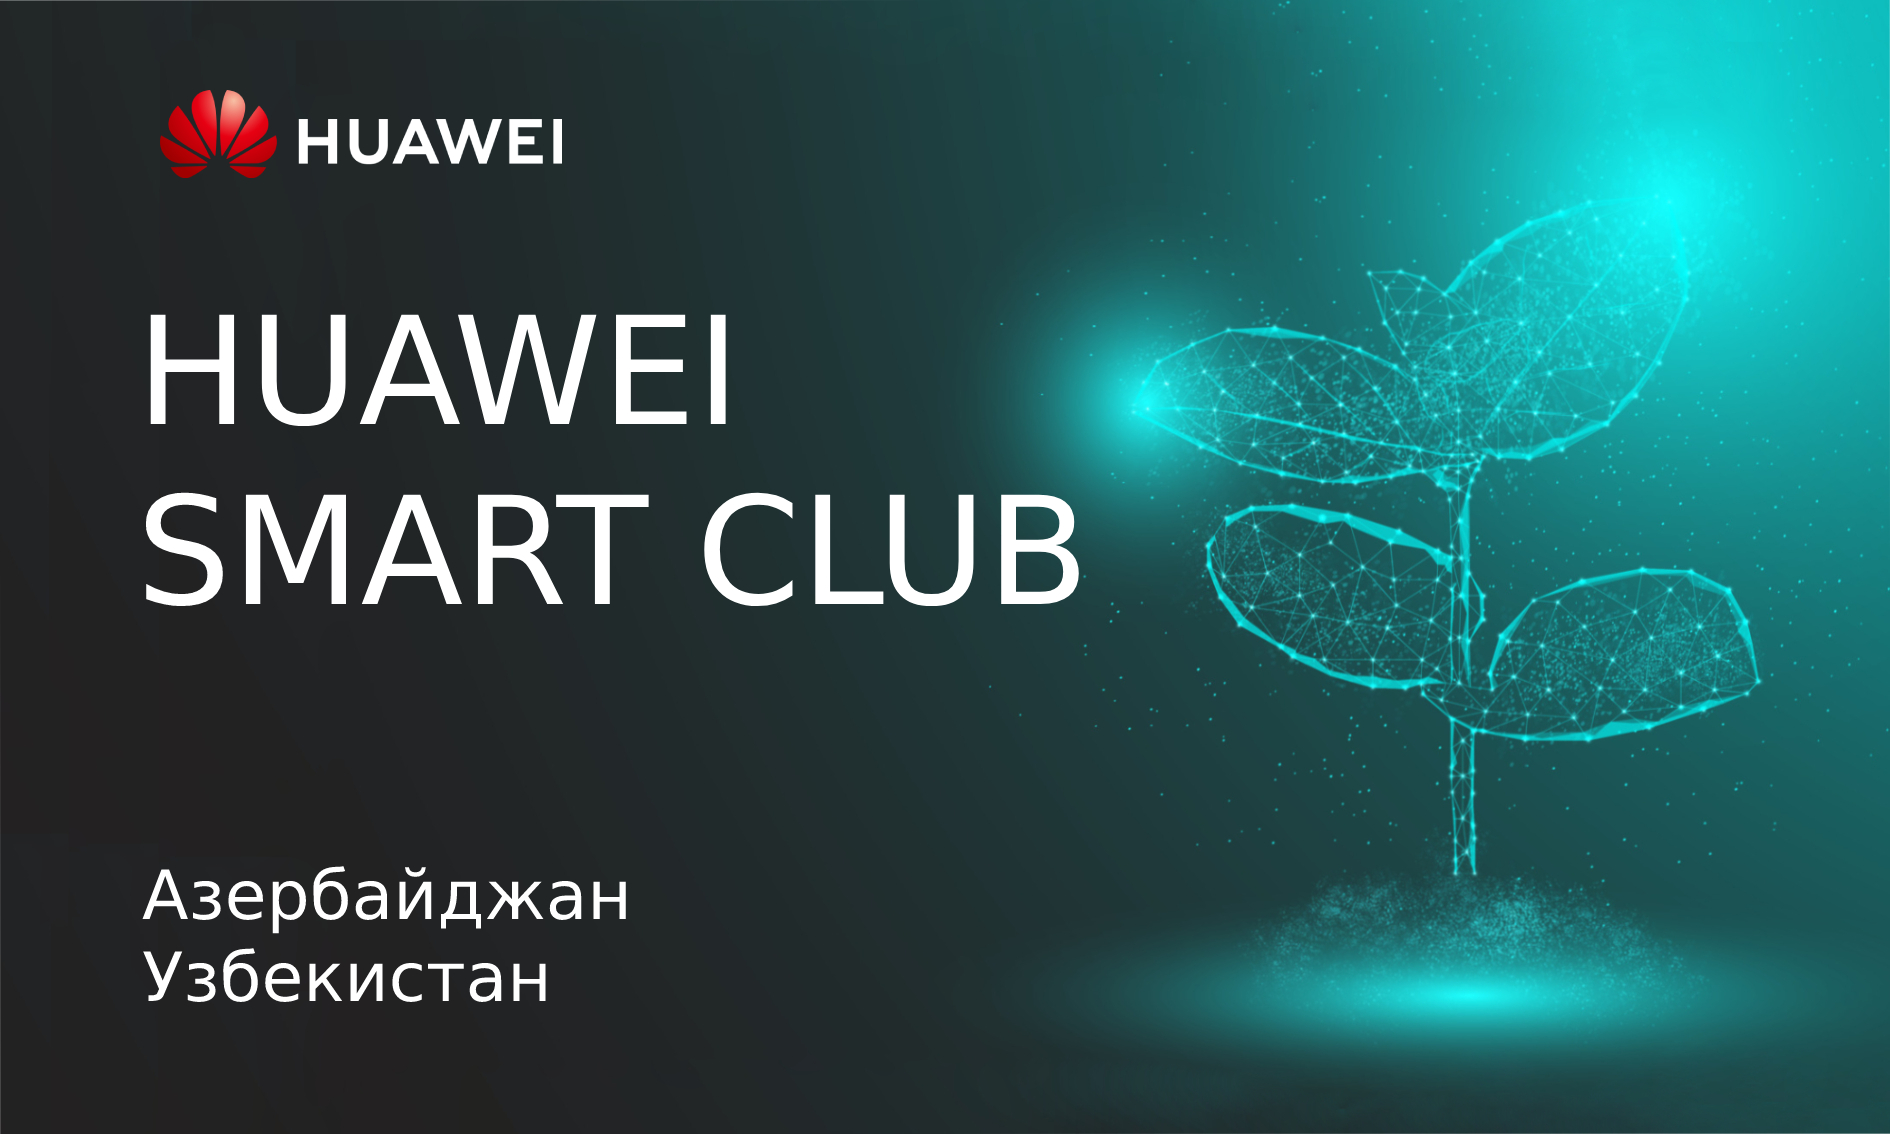 HUAWEI SMART CLUB